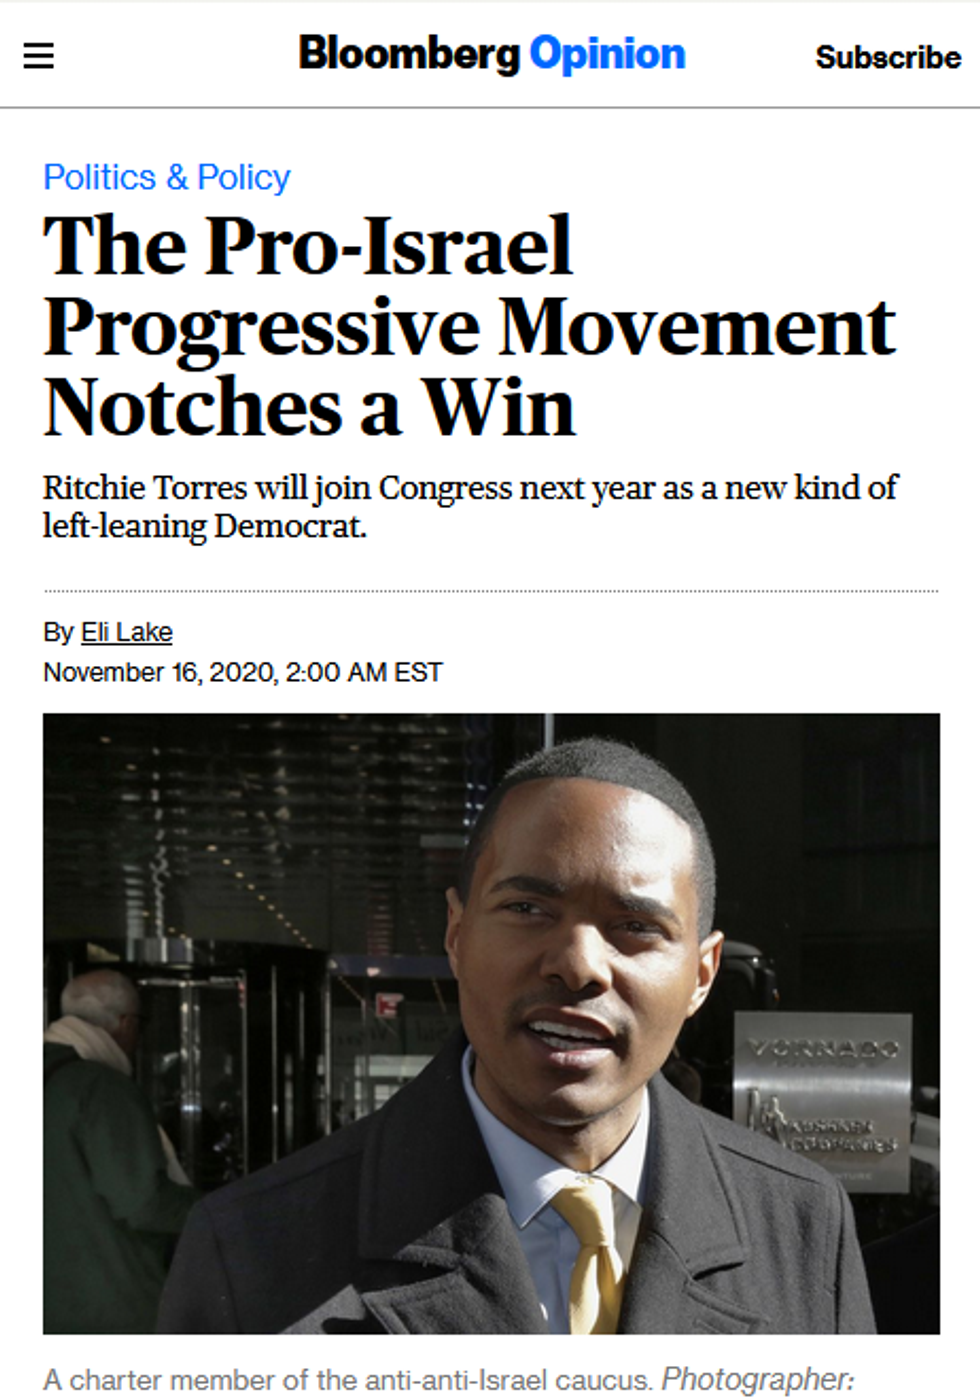 Bloomberg: The Pro-Israel Progressive Movement Notches a Win